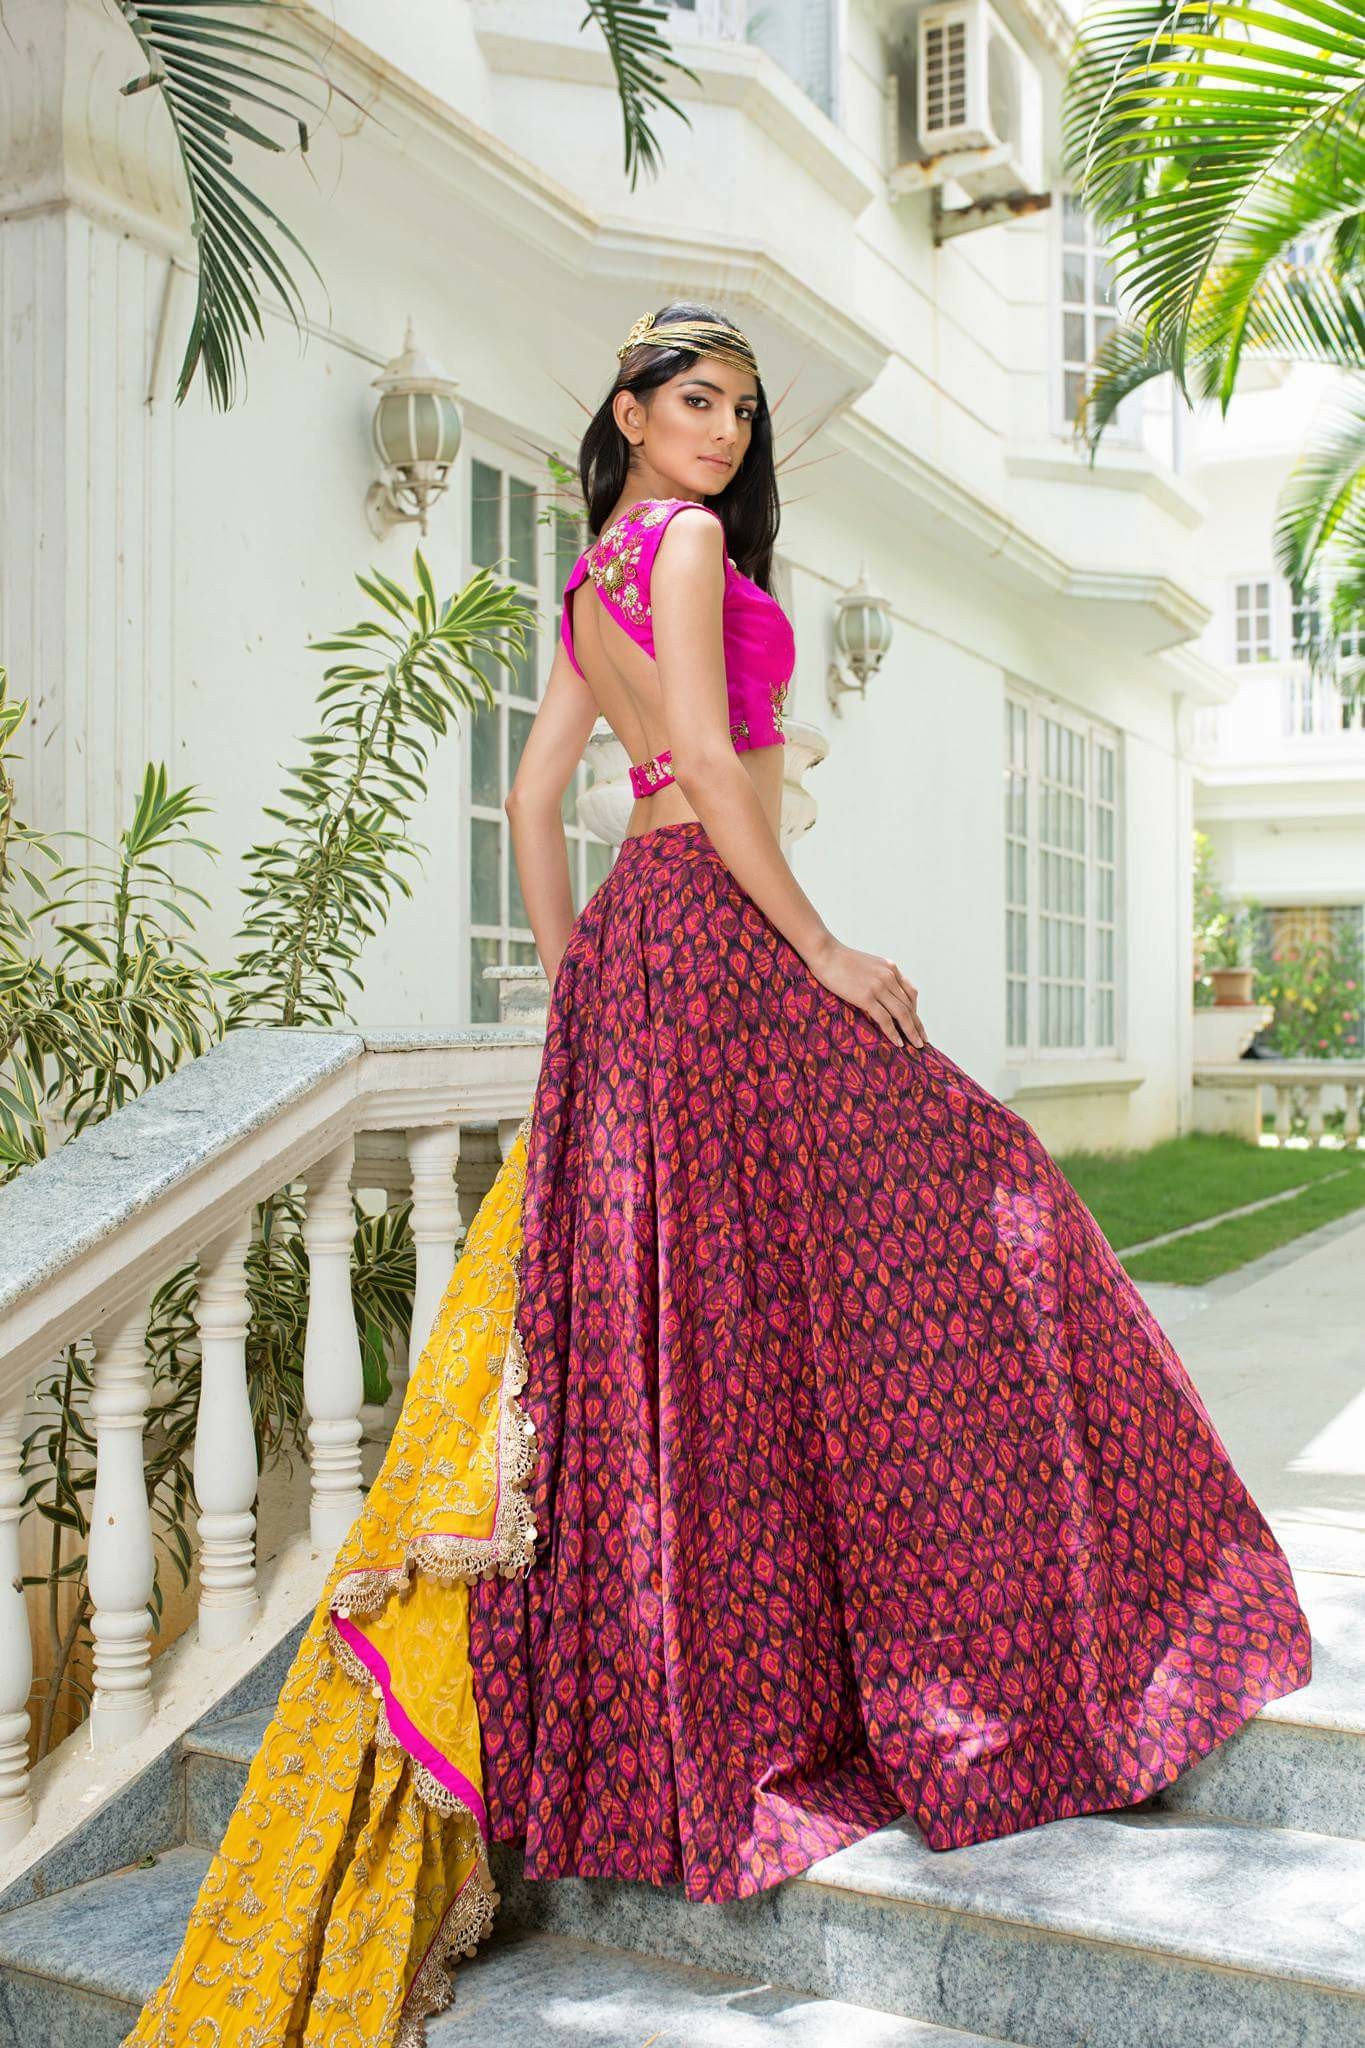 Venus Malik model, Bangalore | Talentrack